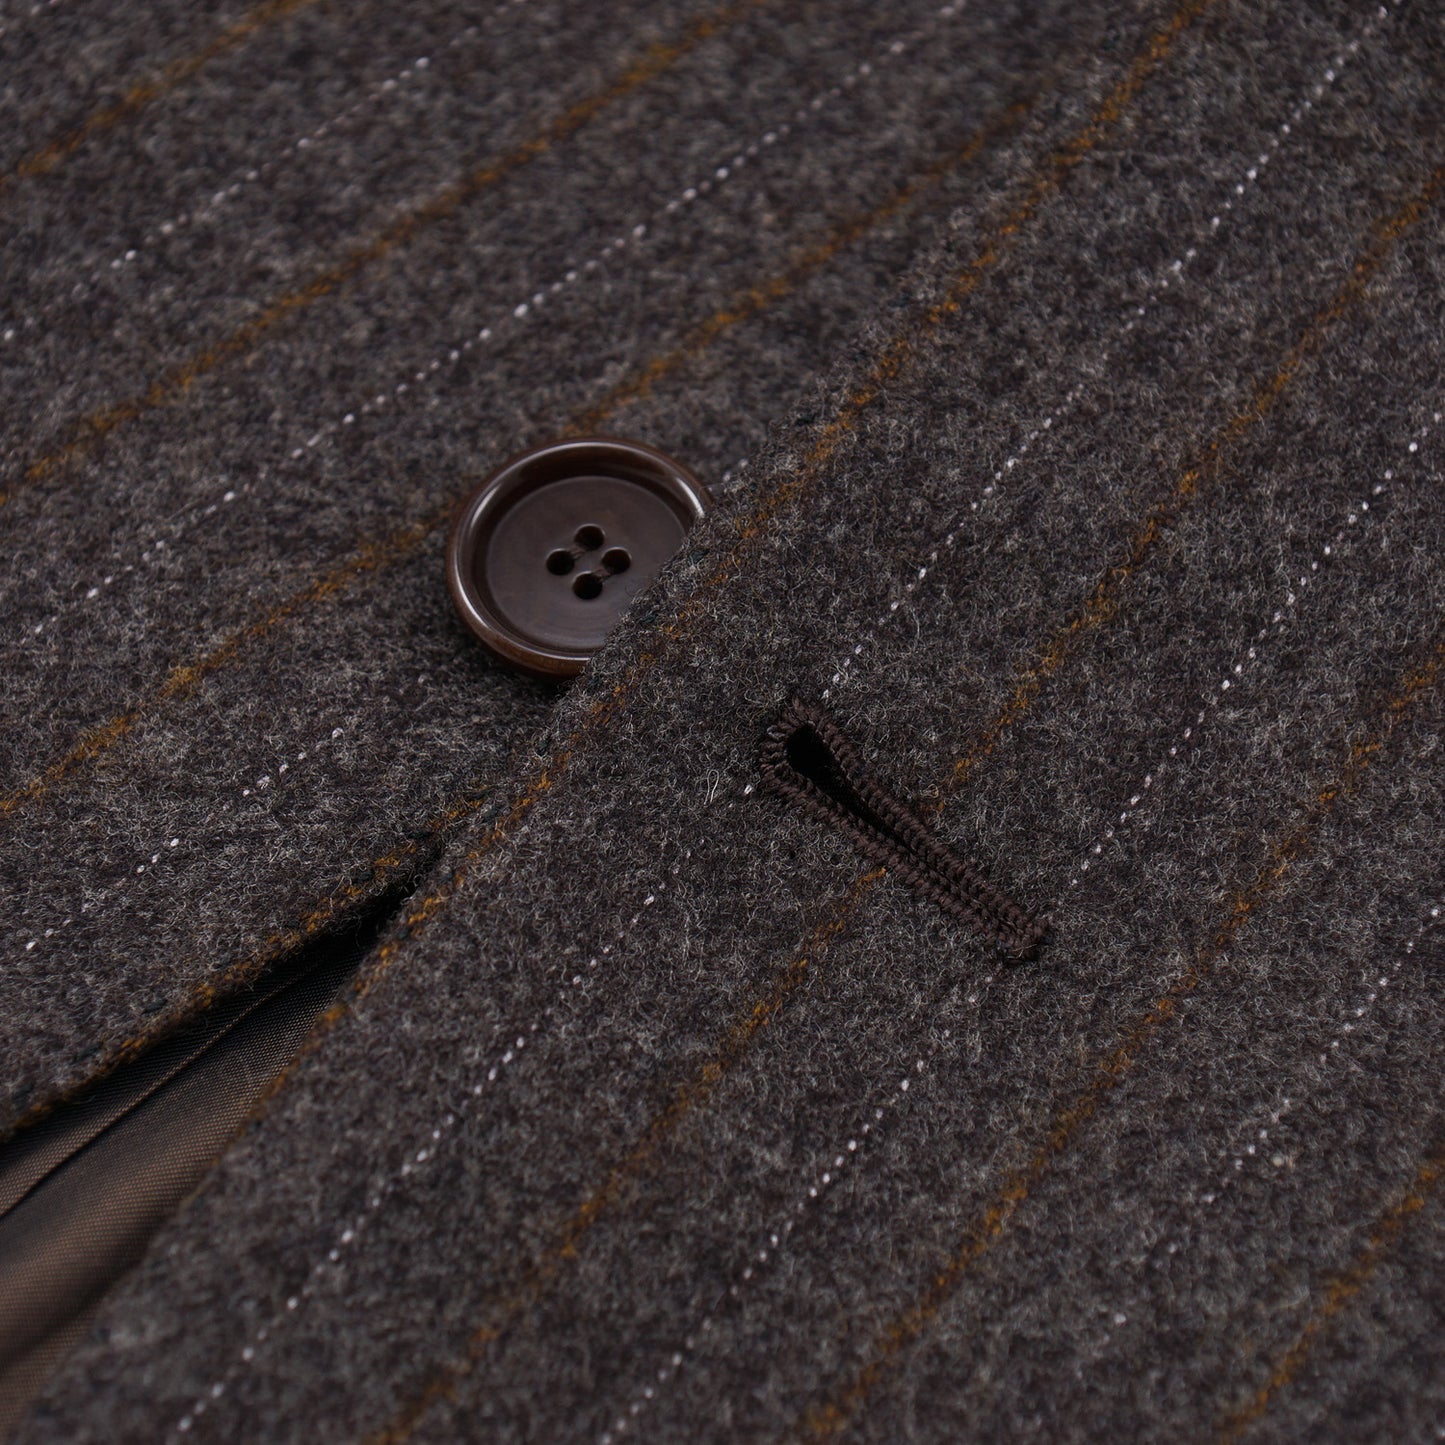 Cesare Attolini Slim-Fit Wool and Cashmere Suit - Top Shelf Apparel